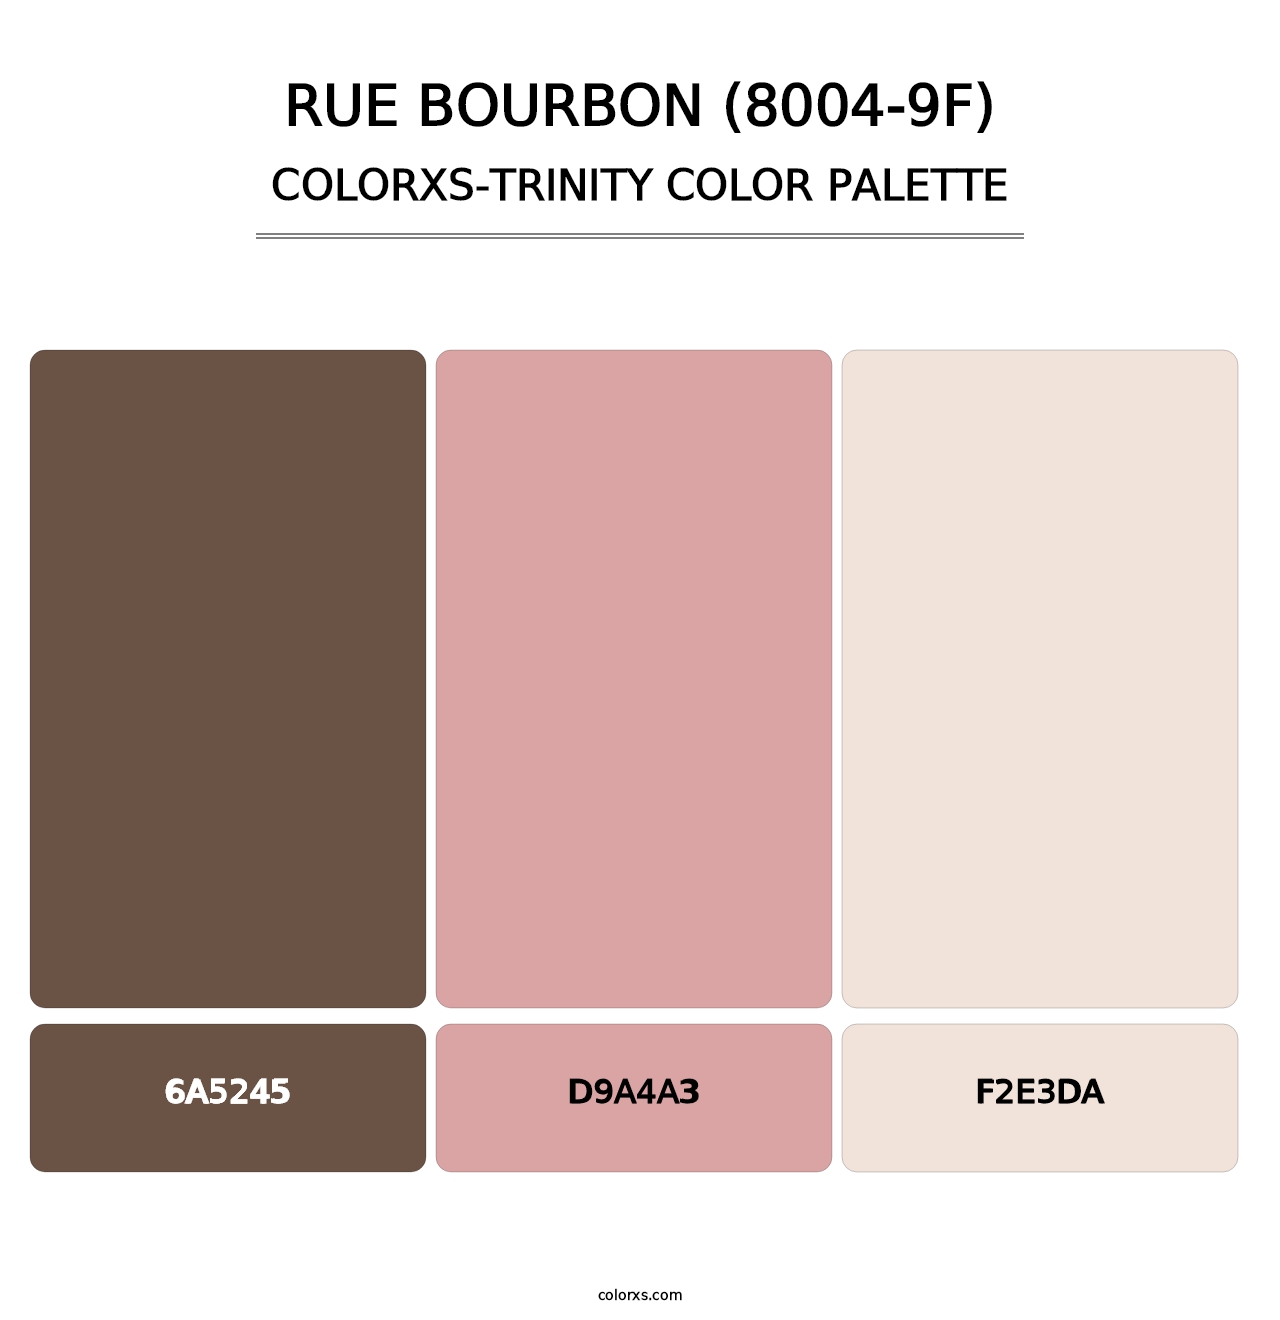 Rue Bourbon (8004-9F) - Colorxs Trinity Palette